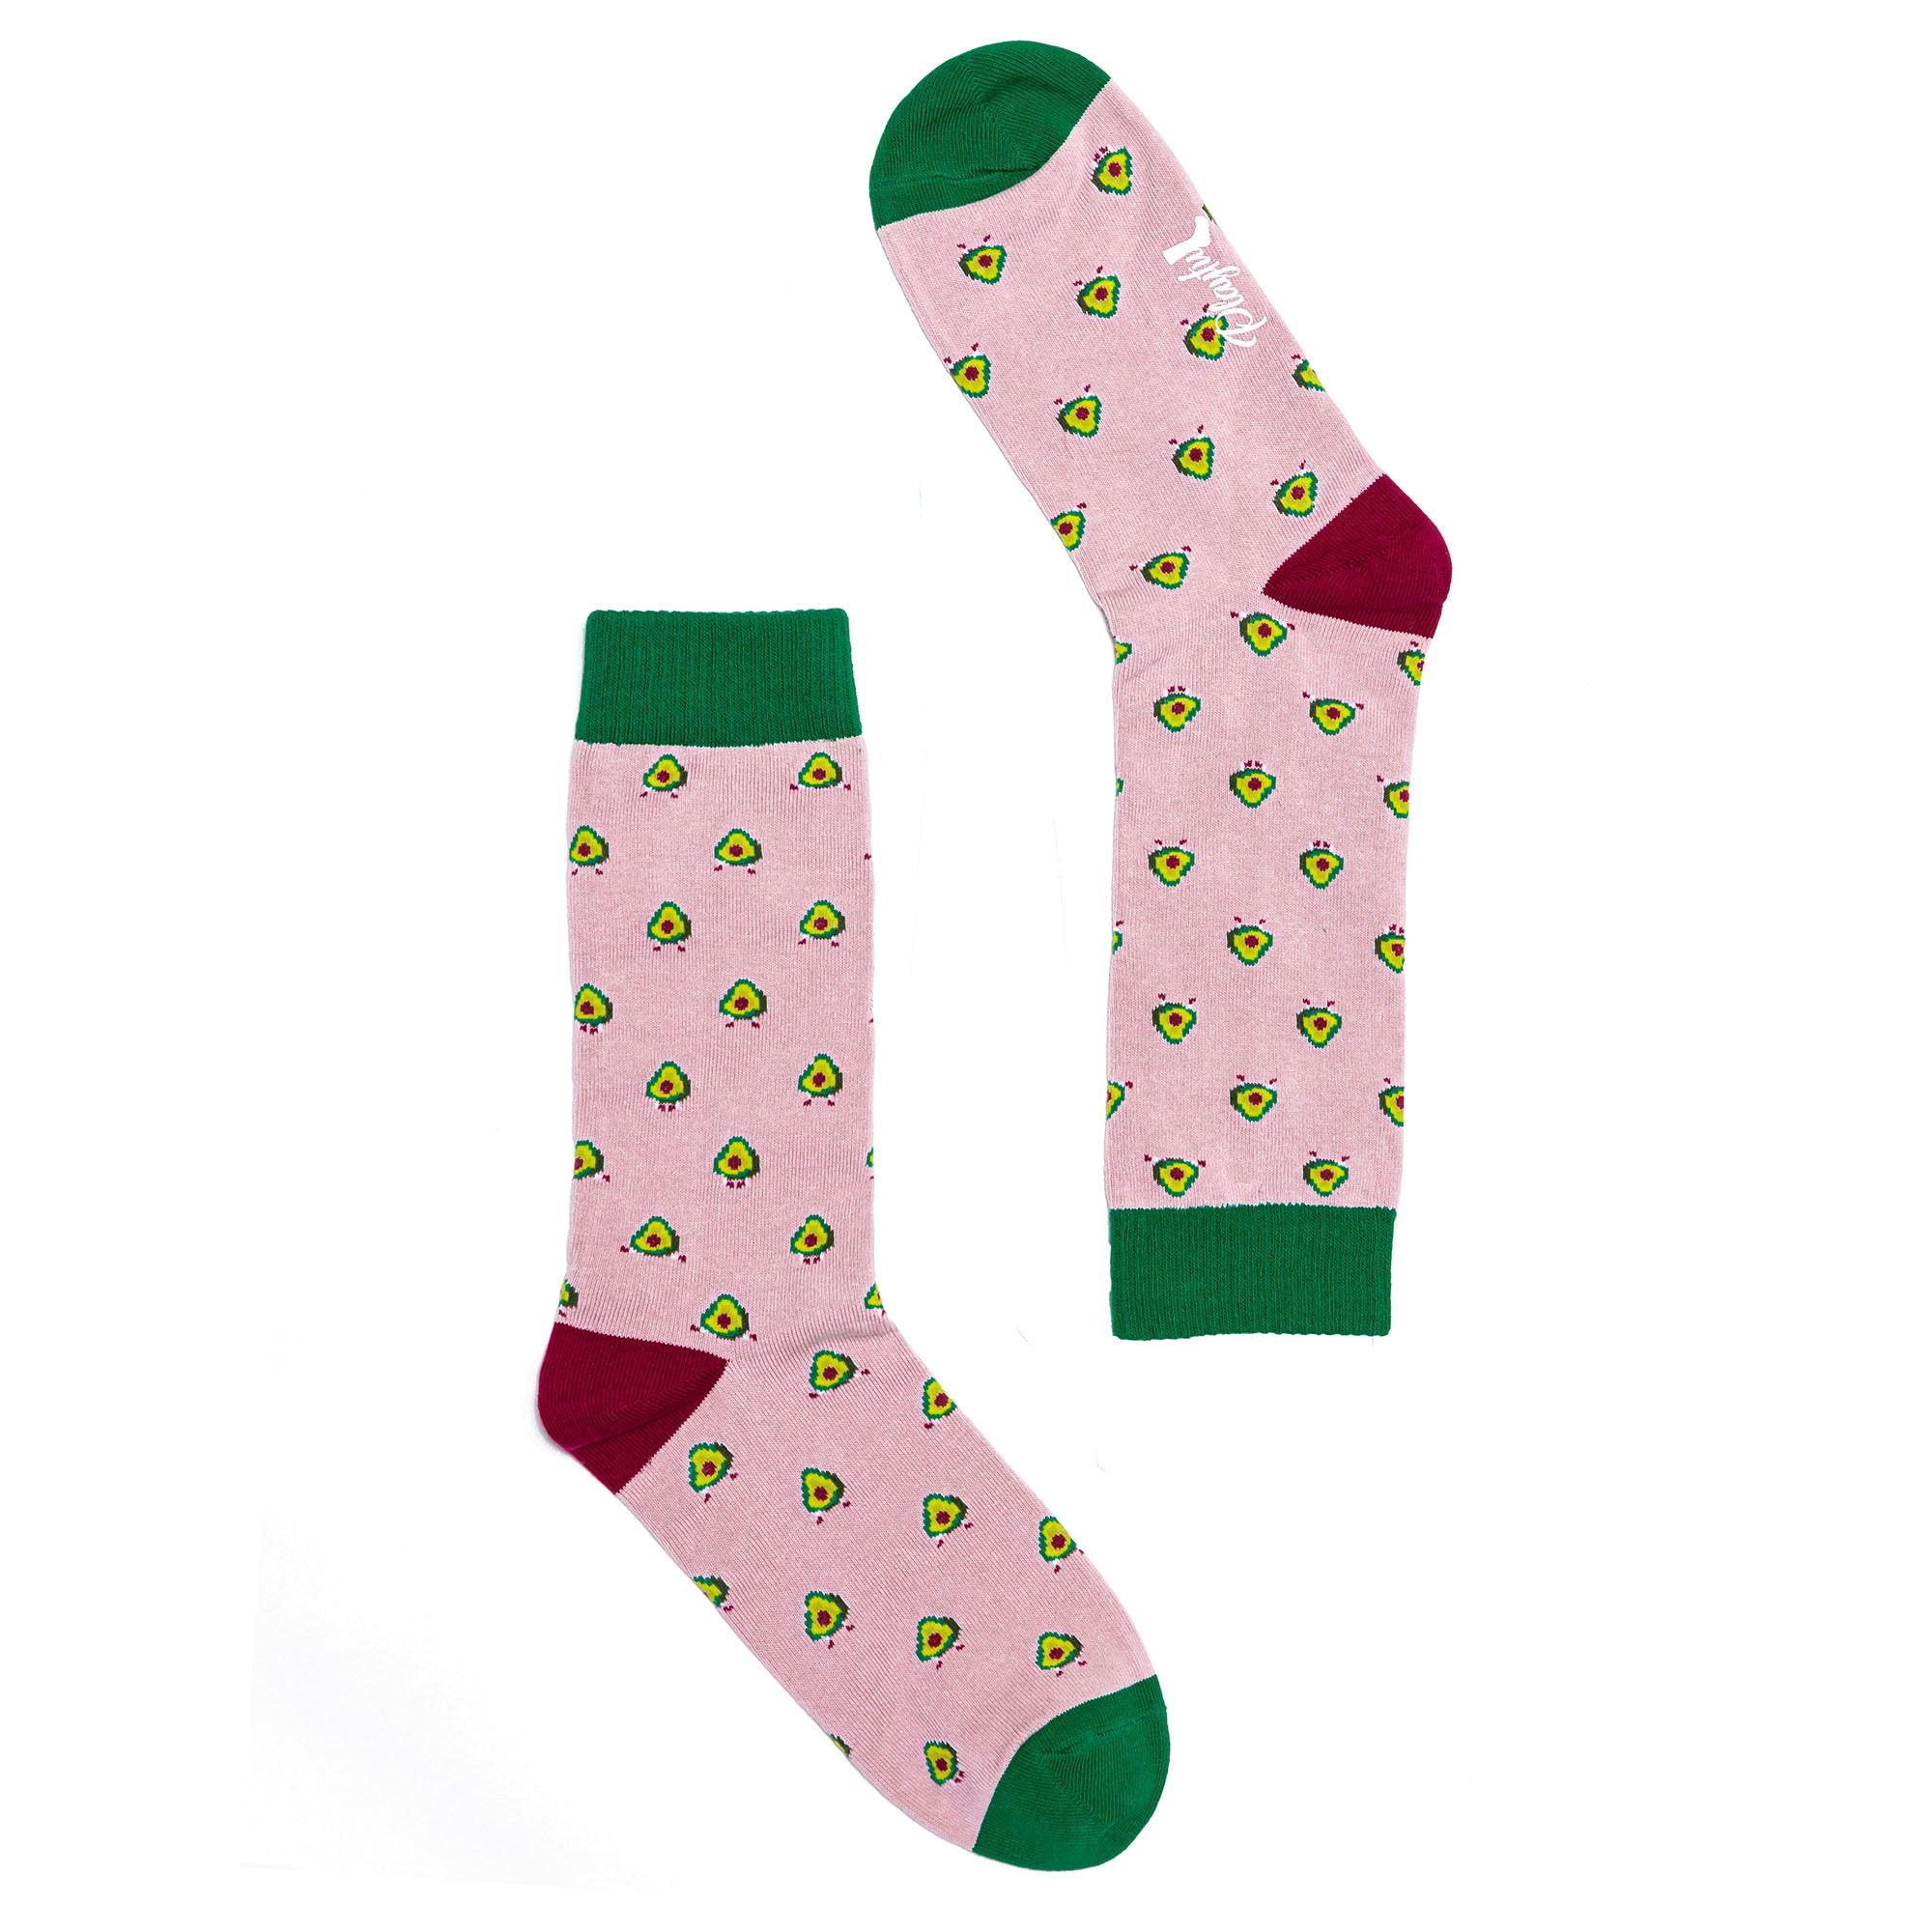 Playful Socks - Avocado